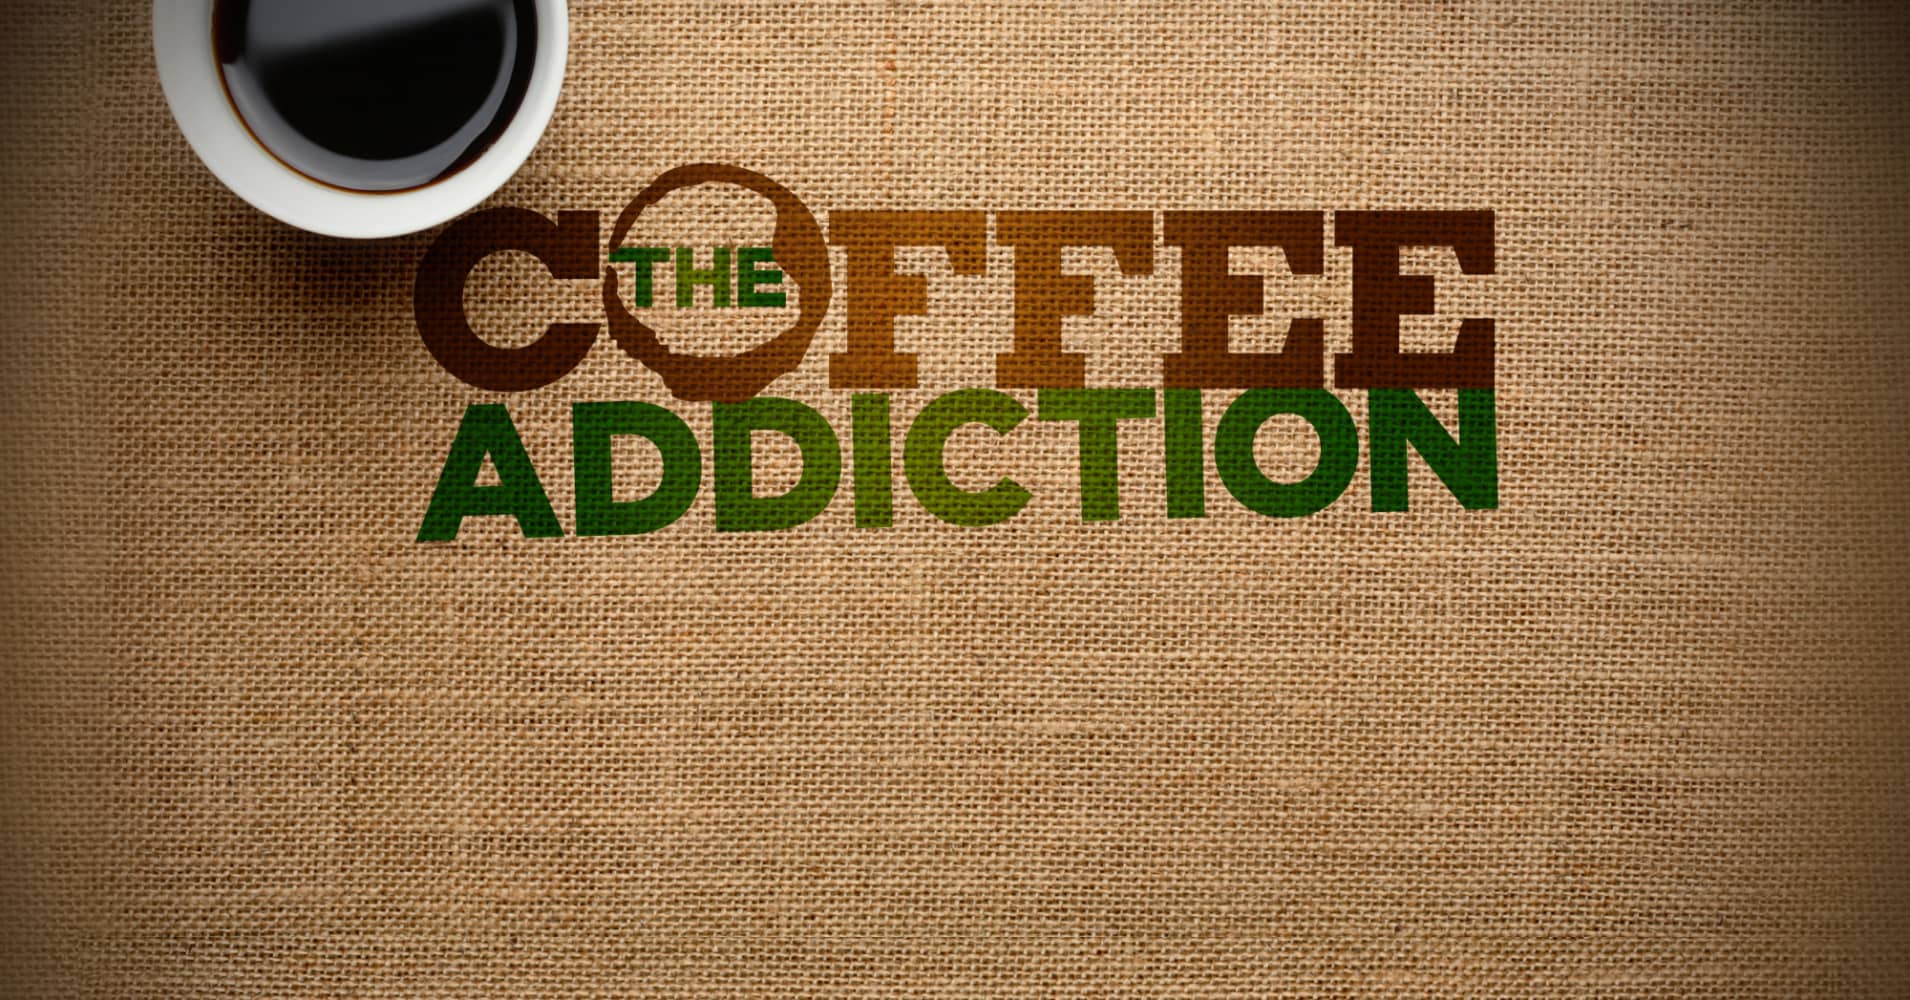 case study on coffee addiction